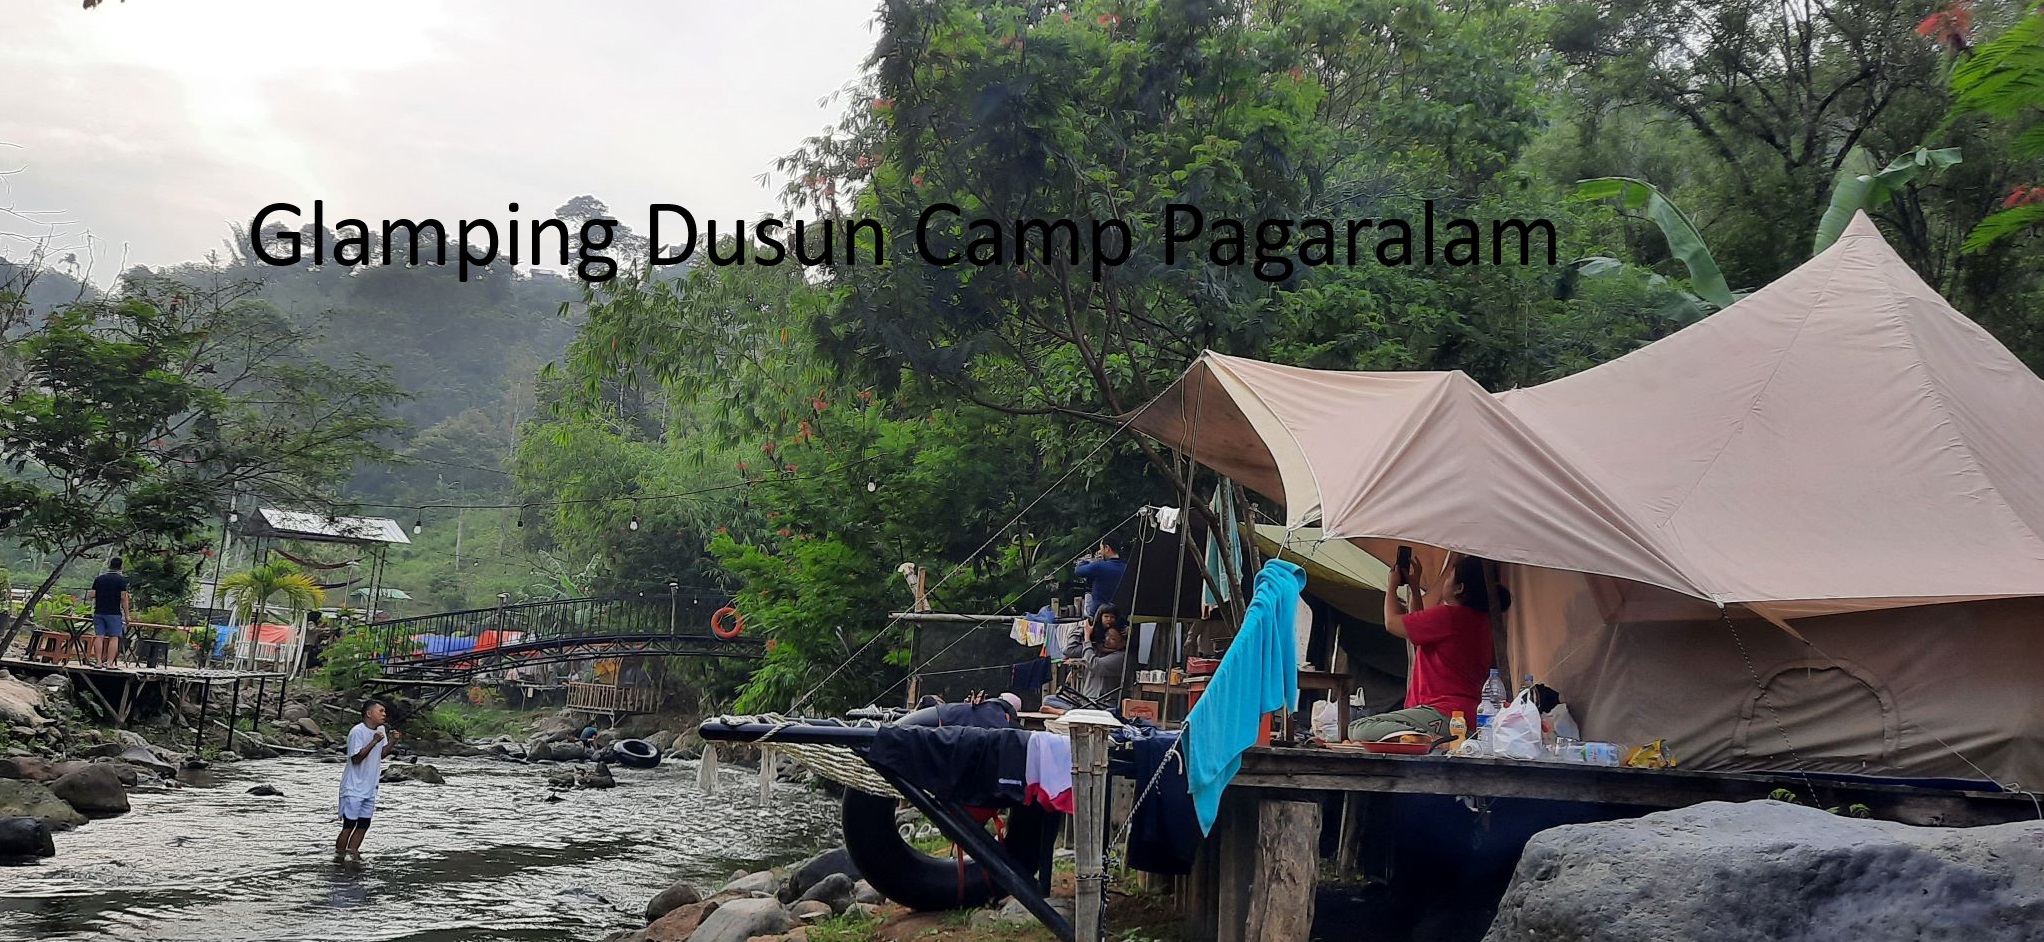 Riverside Dusun Camp Pagaralam di Sumatera Selatan: Surga Camping Glamping di Tepi Sungai Ayek Selangis